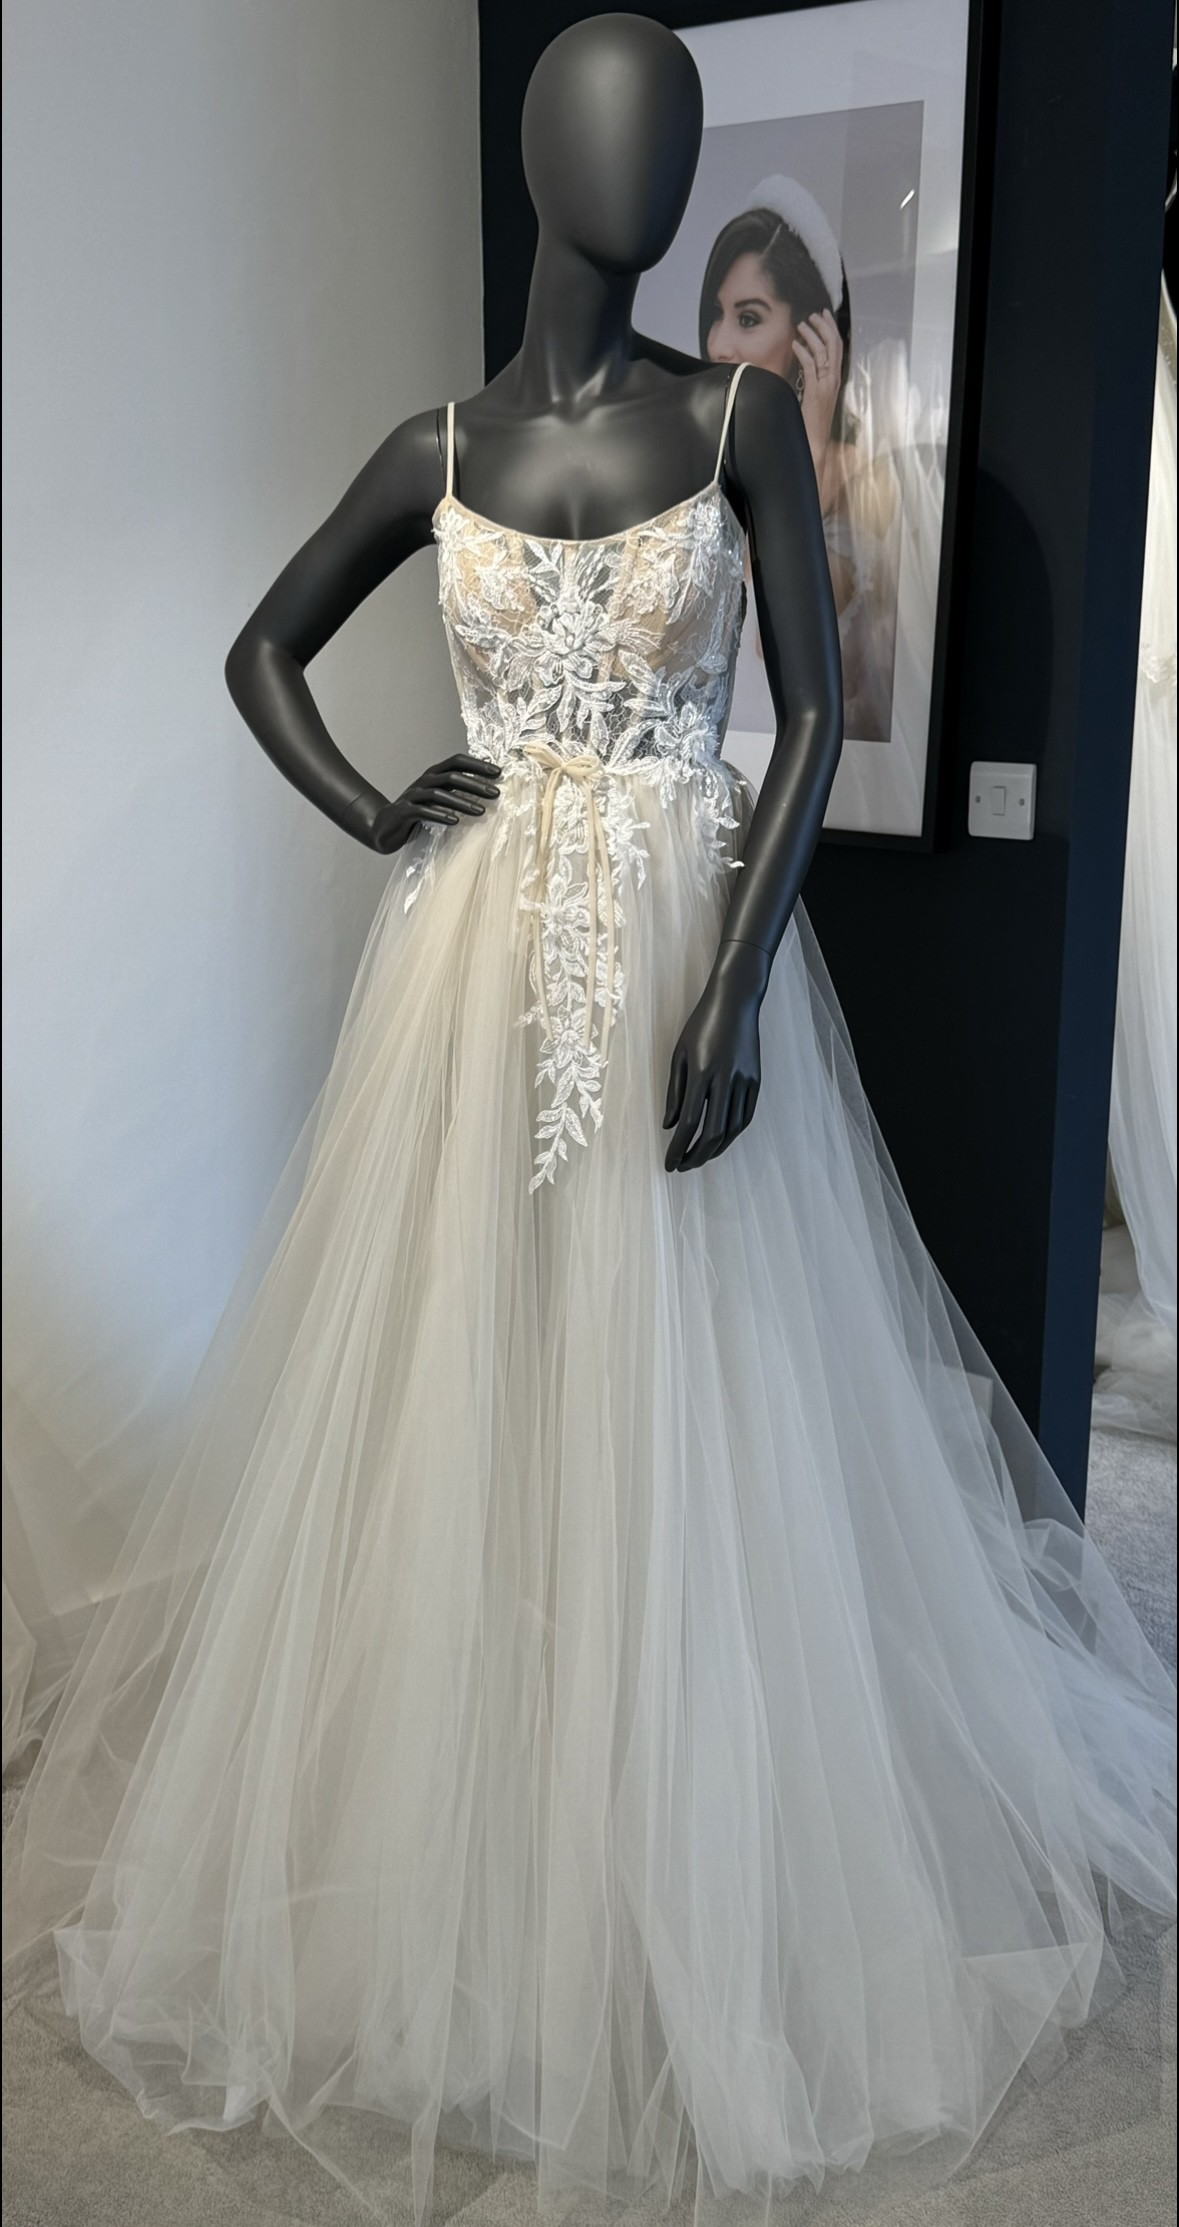 Muse By Berta Ivette Sample Wedding Dress Save 30% - Stillwhite